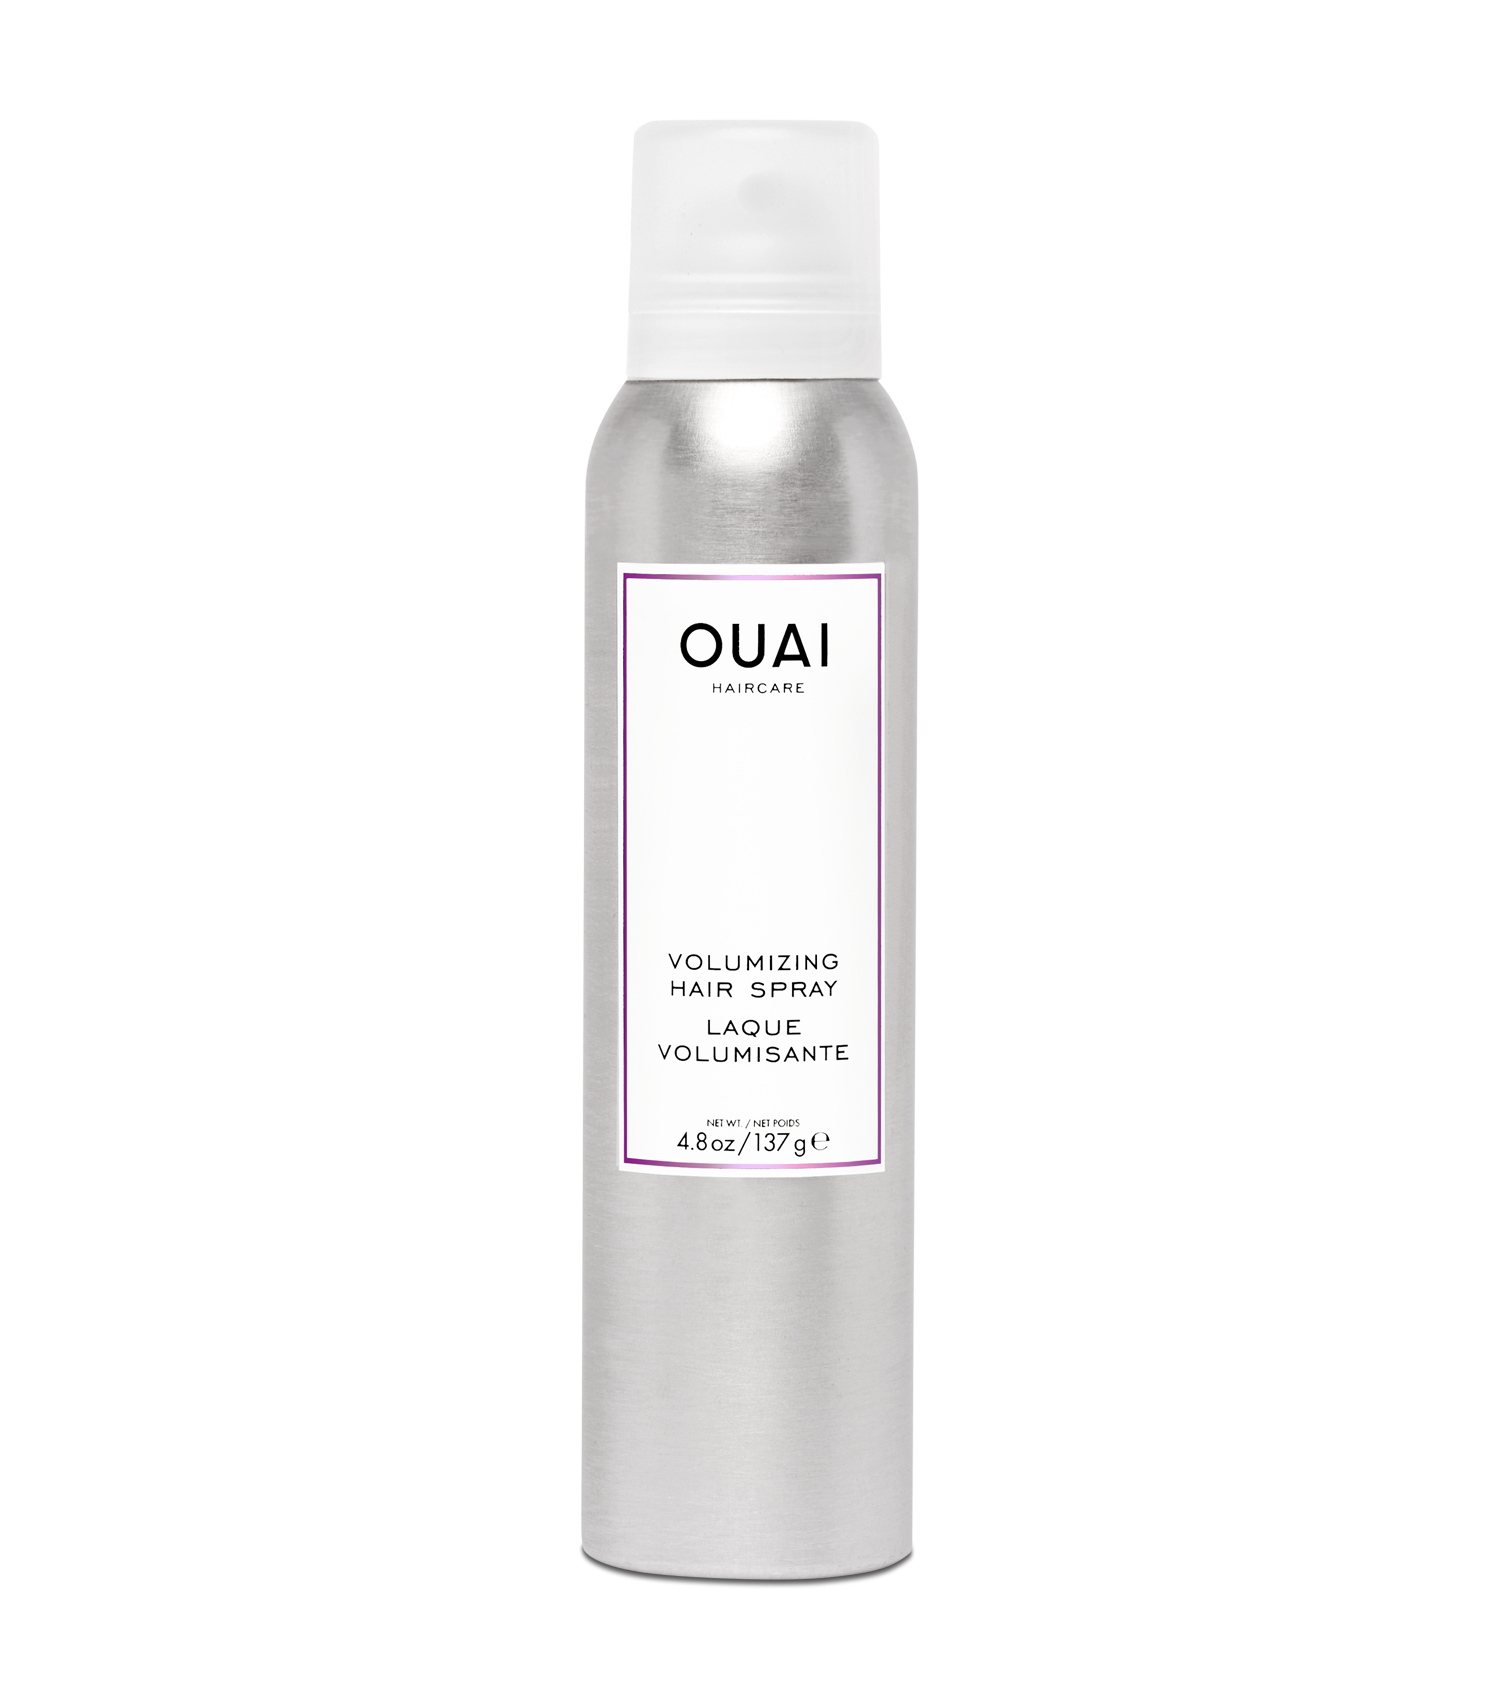 Ouai Volumizing Hair Spray - Full Size